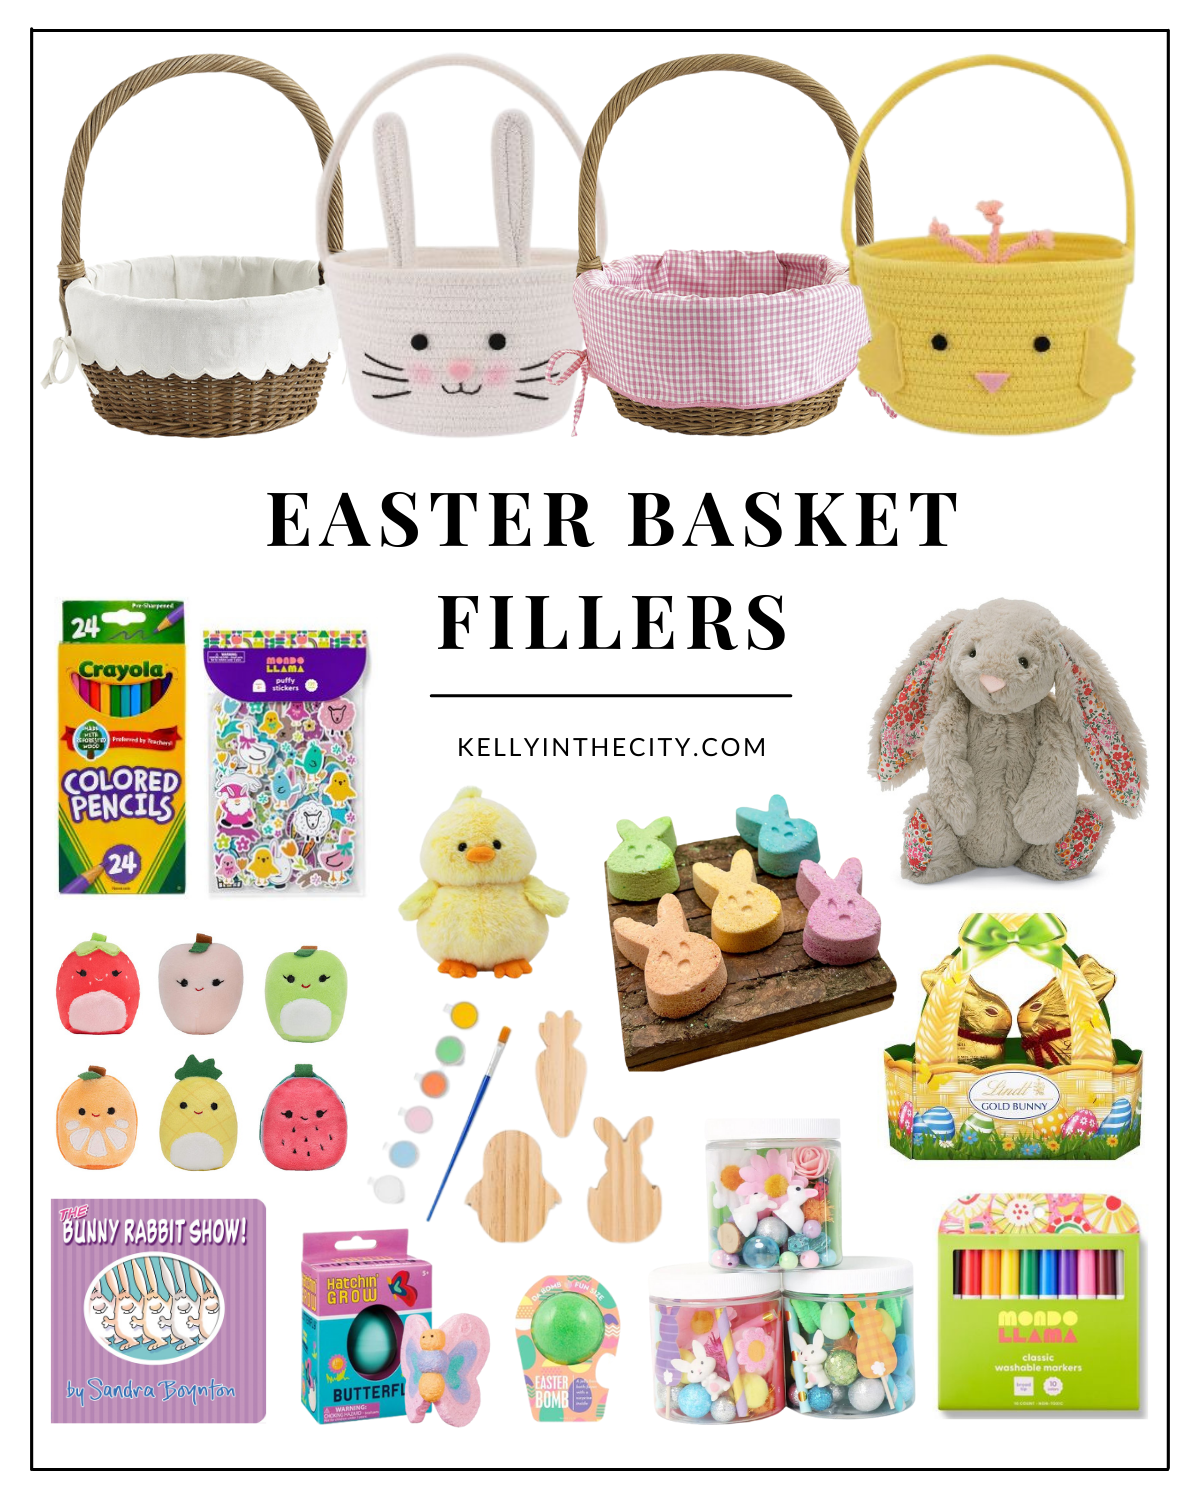 Easter Basket Filler Ideas - Kelly in the City